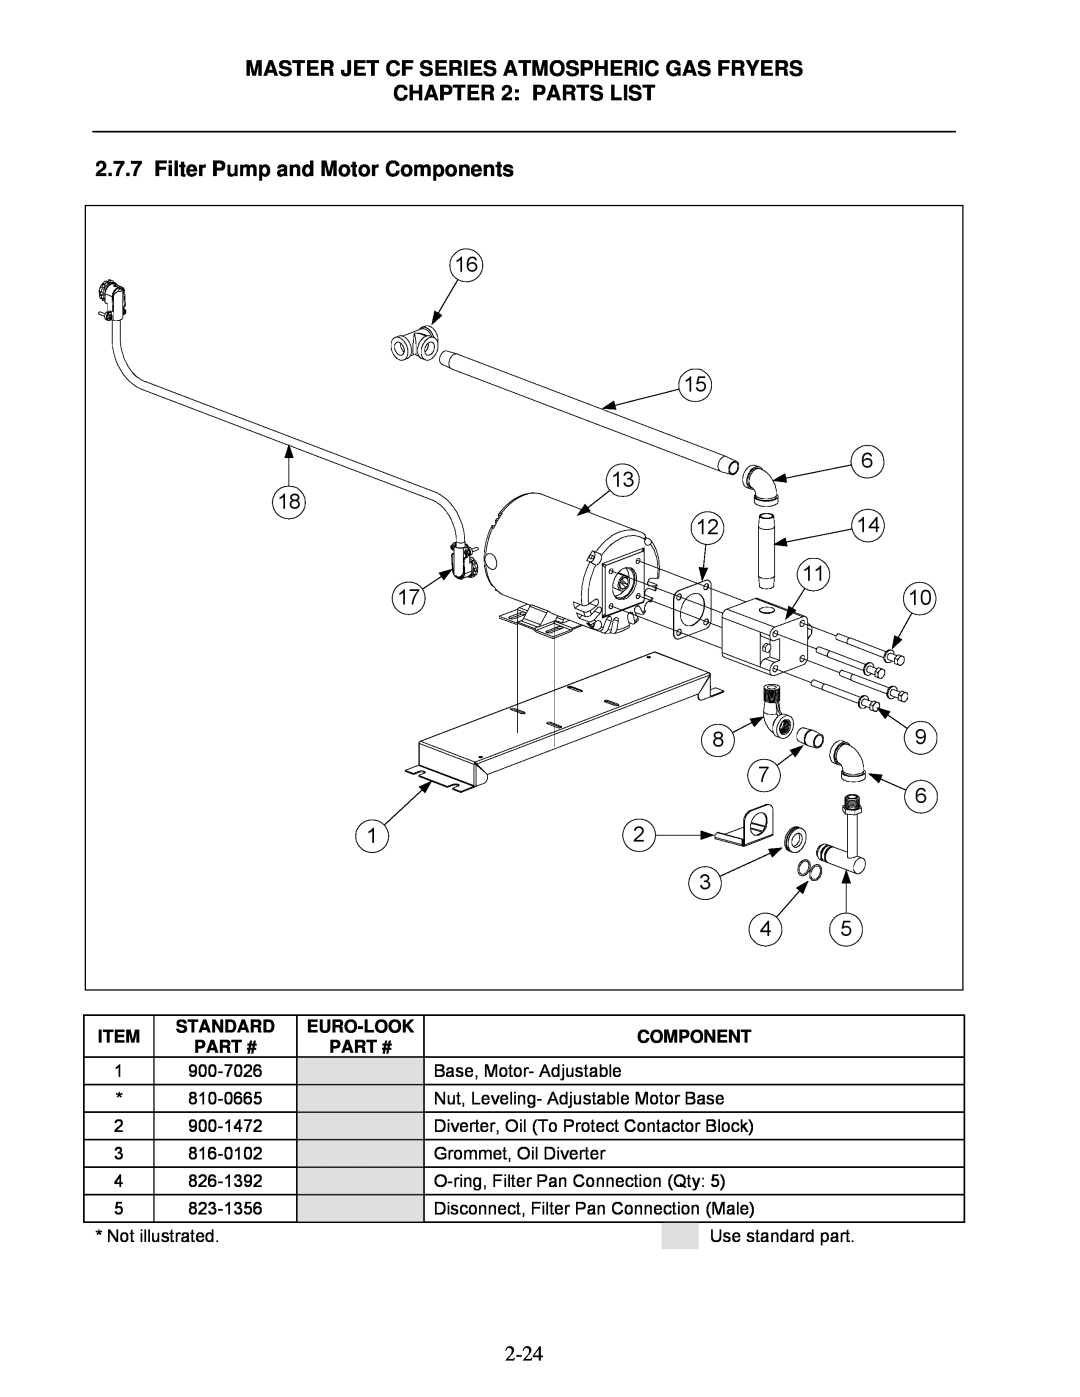 Frymaster J3F Filter Pump and Motor Components, Master Jet Cf Series Atmospheric Gas Fryers Parts List, Standard, Part # 